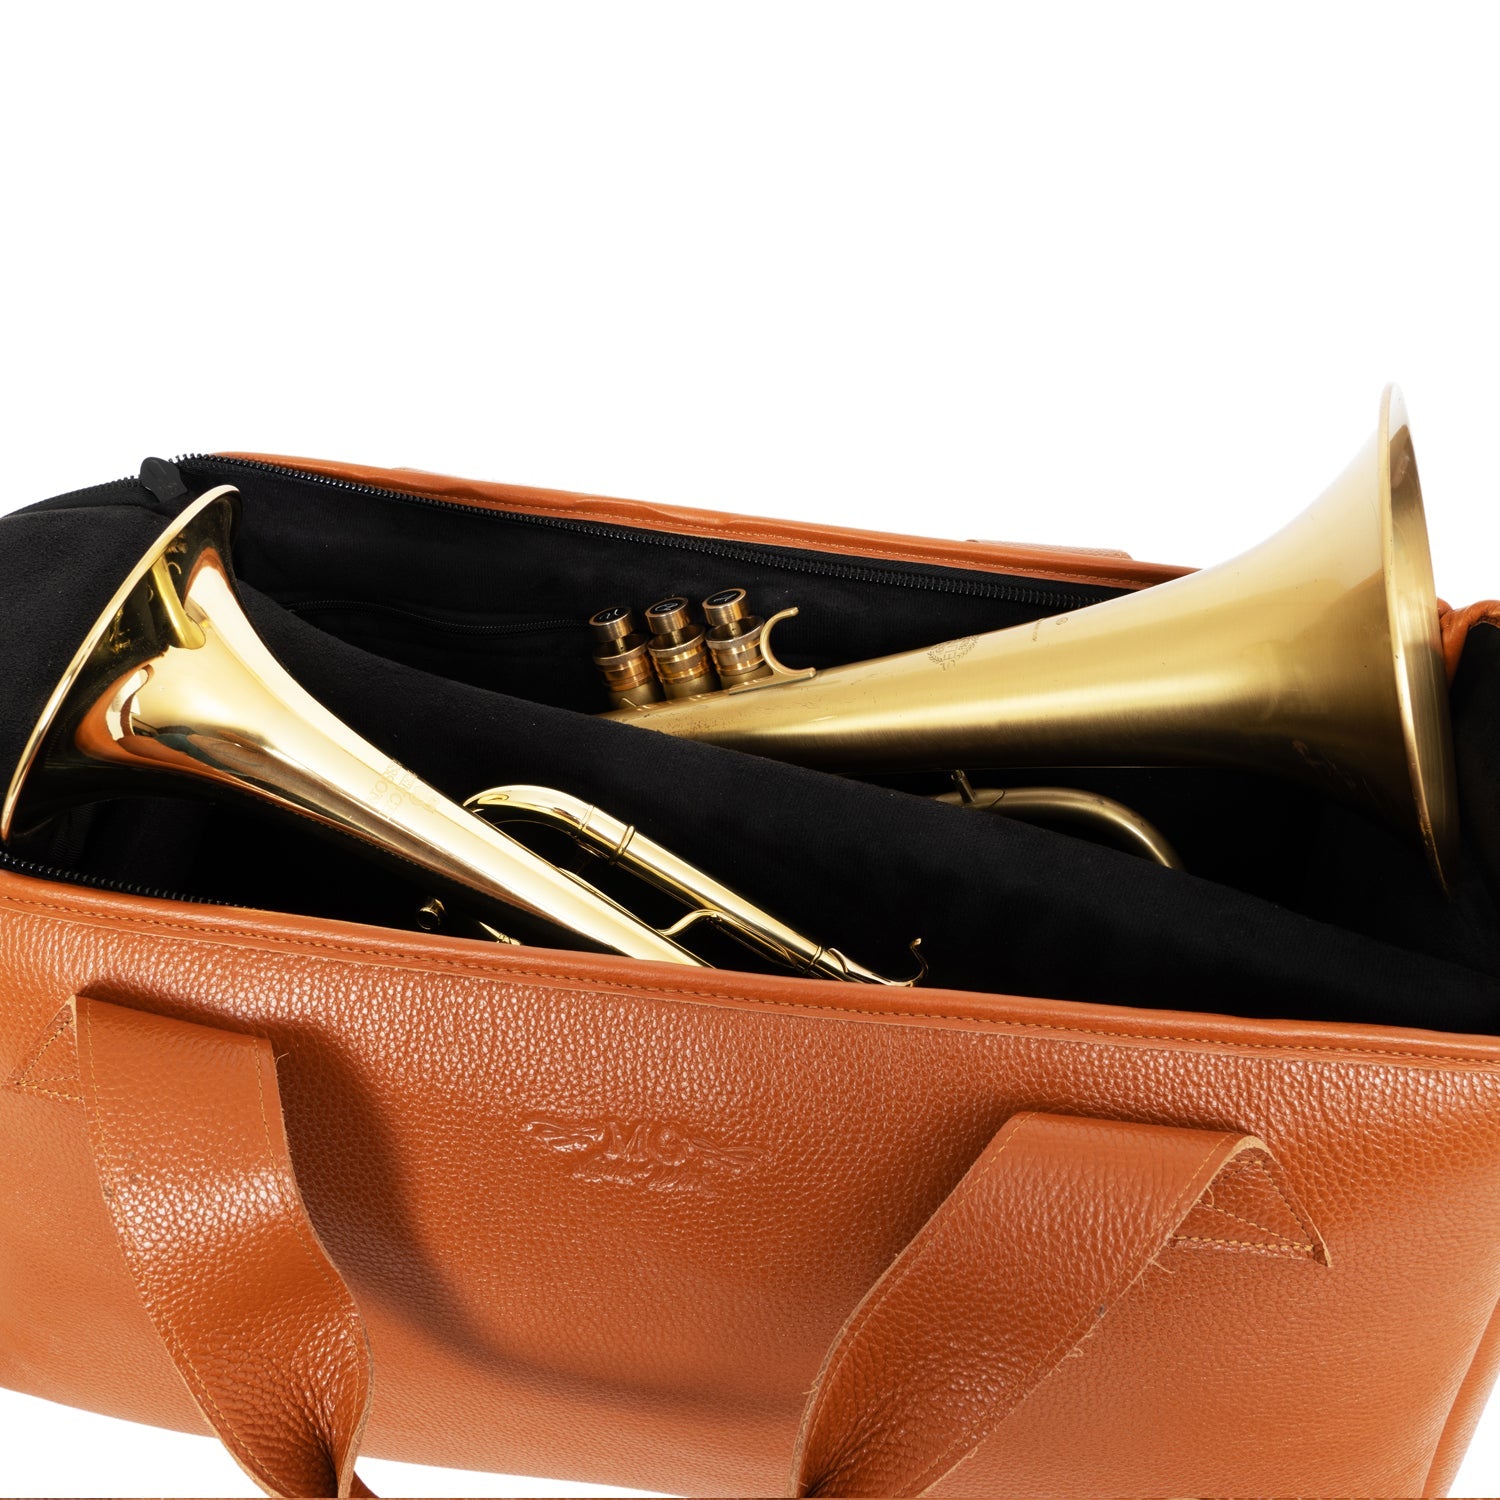 Triple or Double Trumpet/Flugelhorn Gig Bag in Flotar Leather